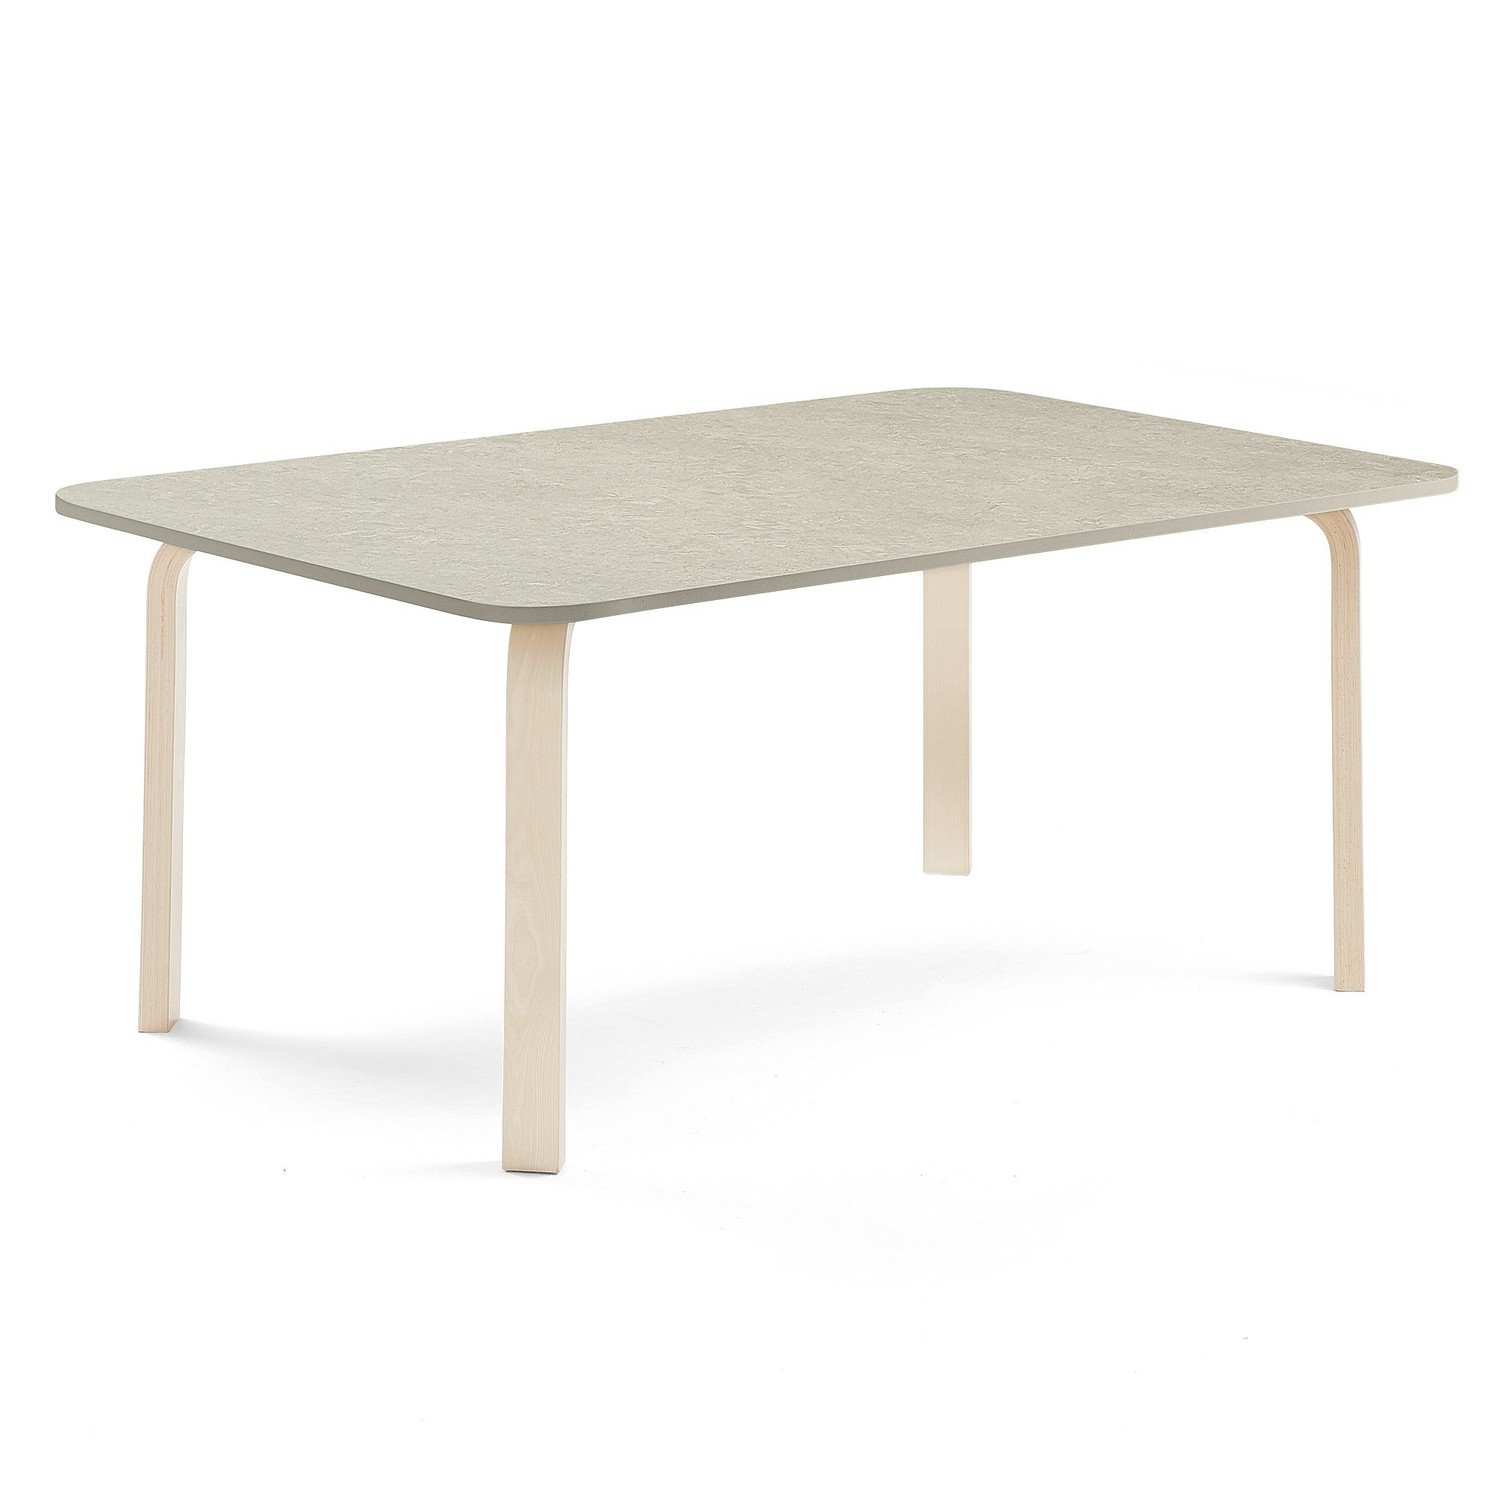 Stůl ELTON, 1800x800x590 mm, bříza, akustické linoleum, šedá